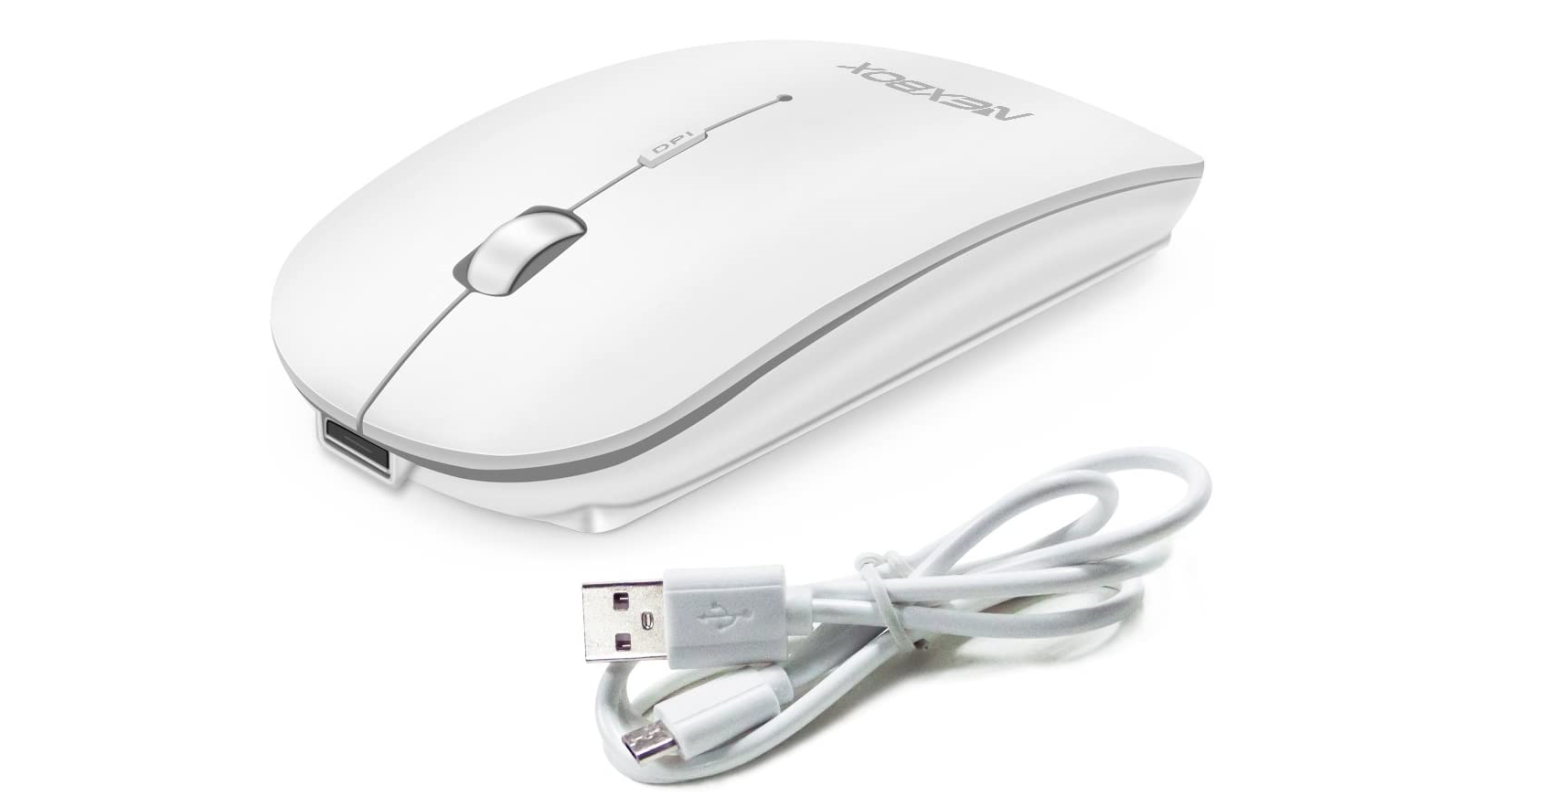 NEXBOX A28 Wireless Mouse User Guide